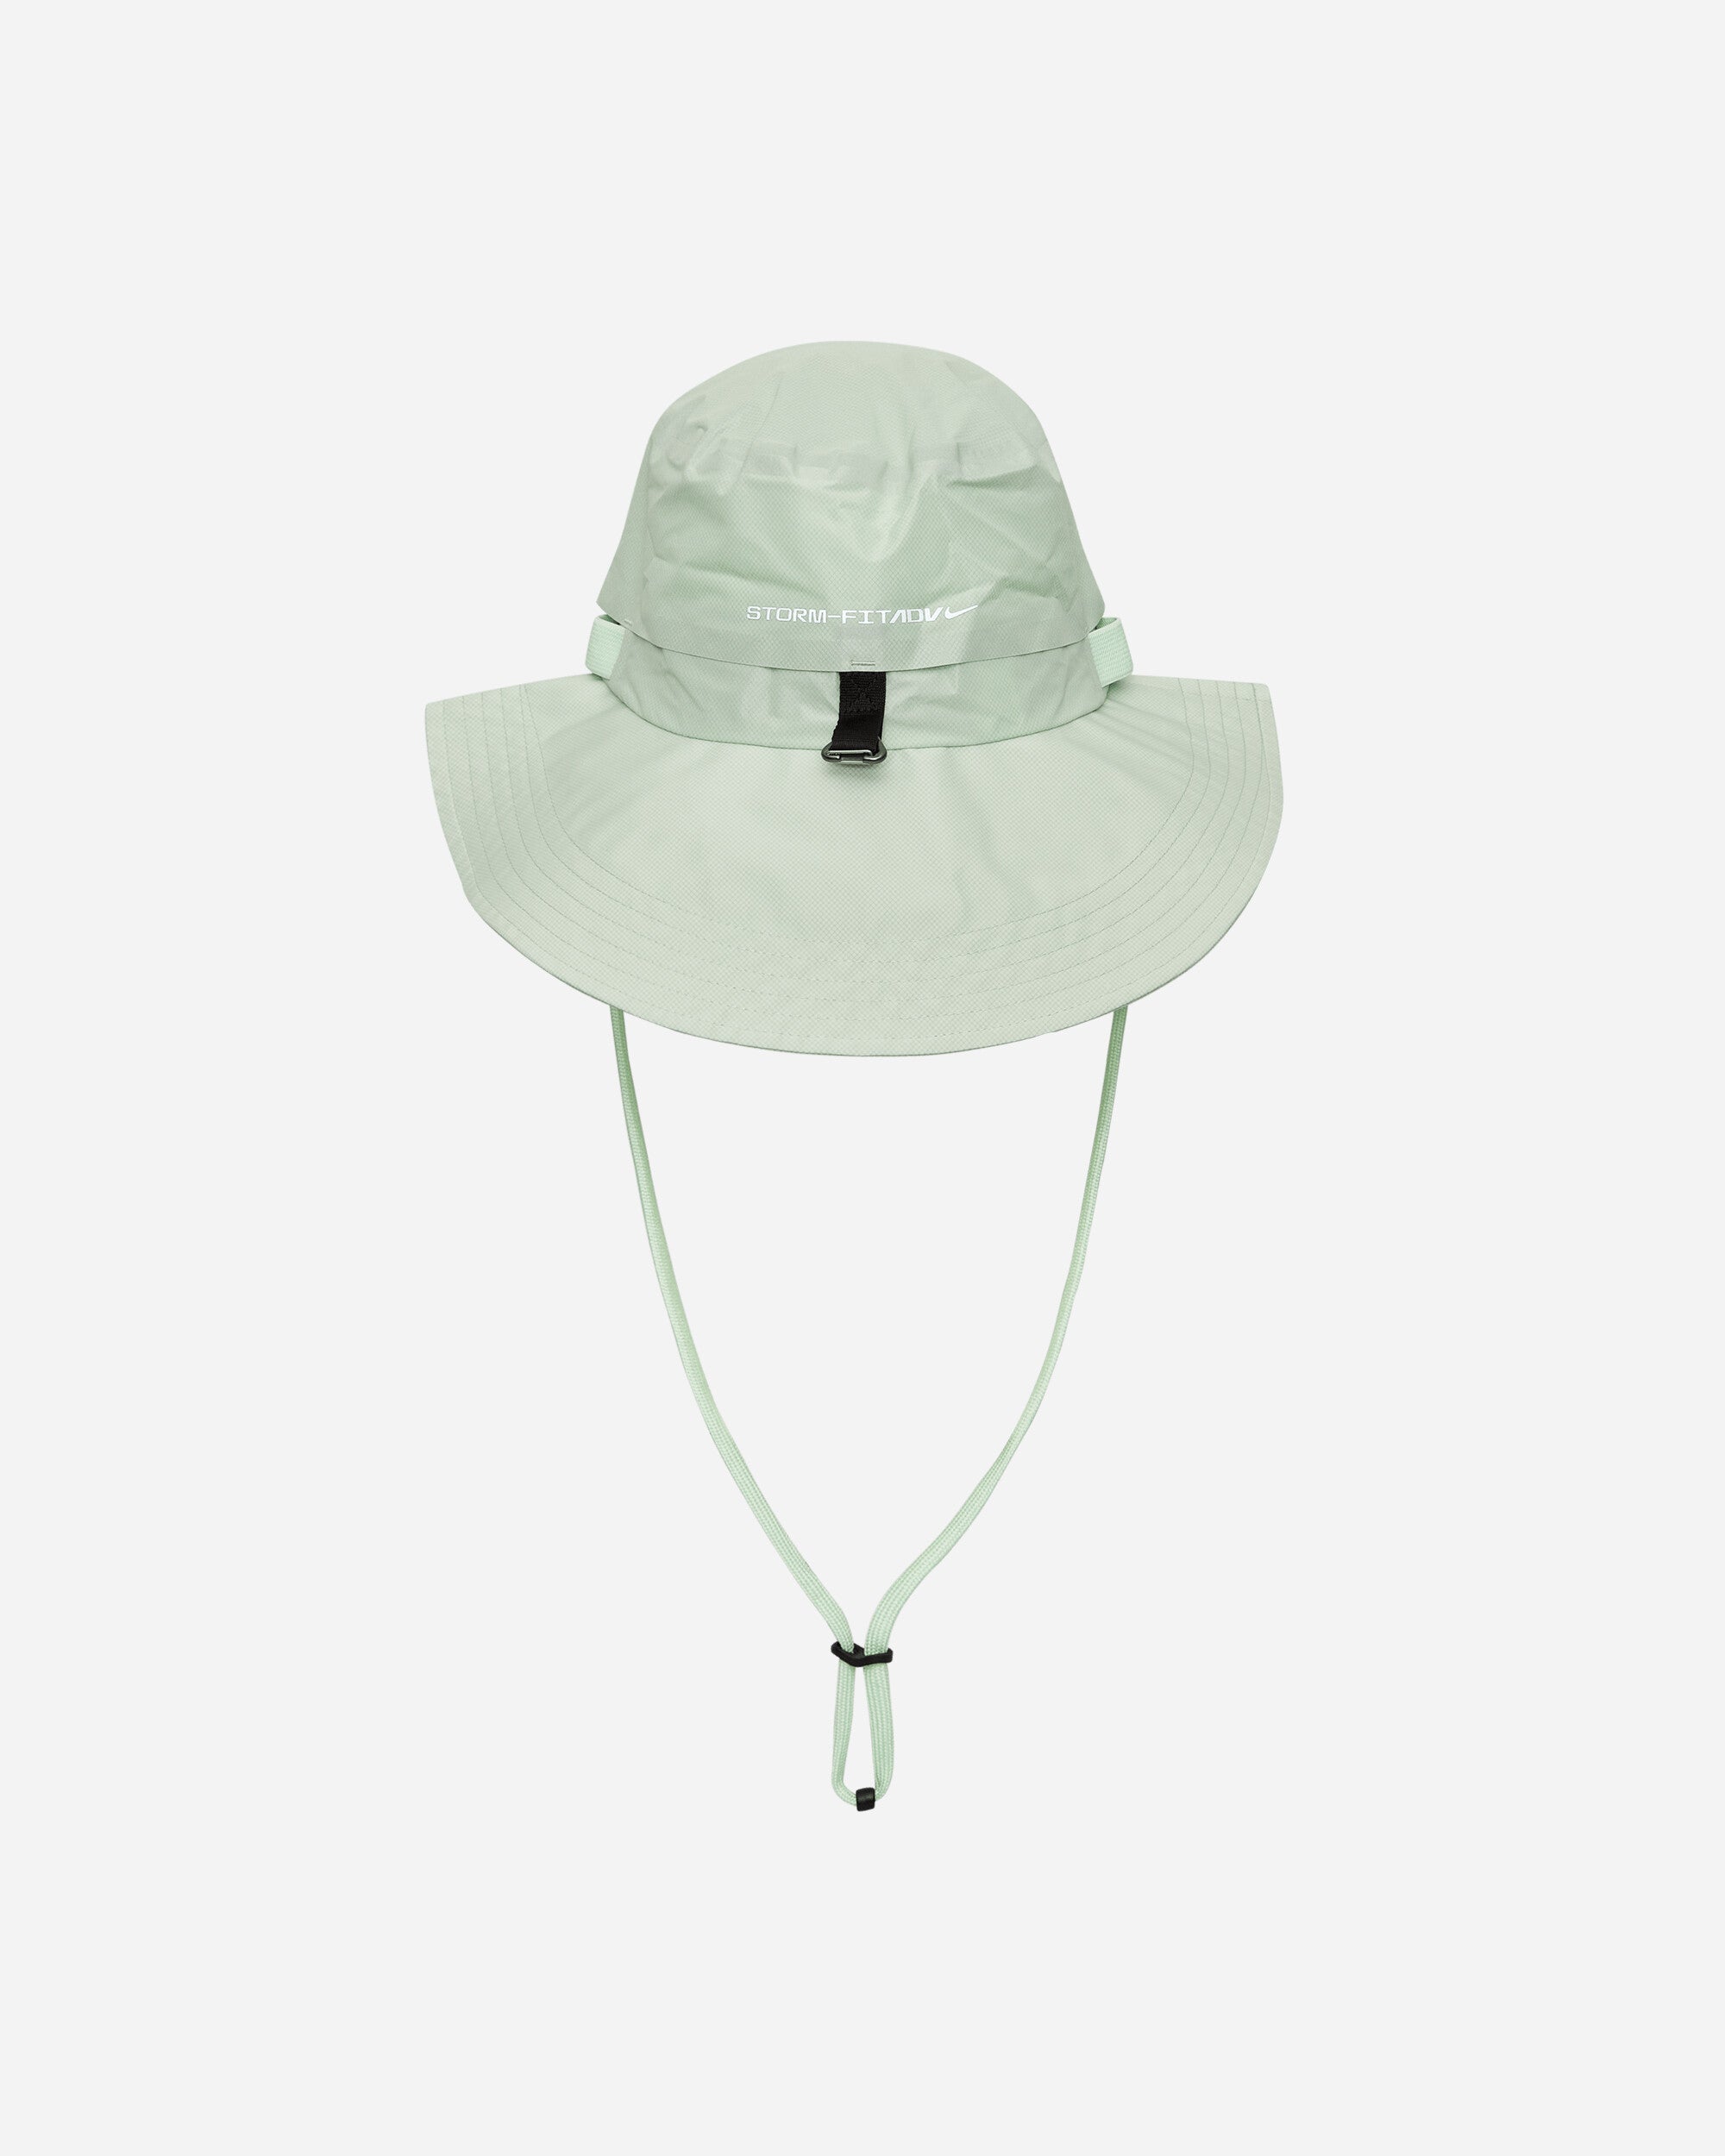 Nike U Nk Sf Apex Bucket Wb Acg Pkb Vapor Green/Reflective Silv Hats Bucket FQ6845-376